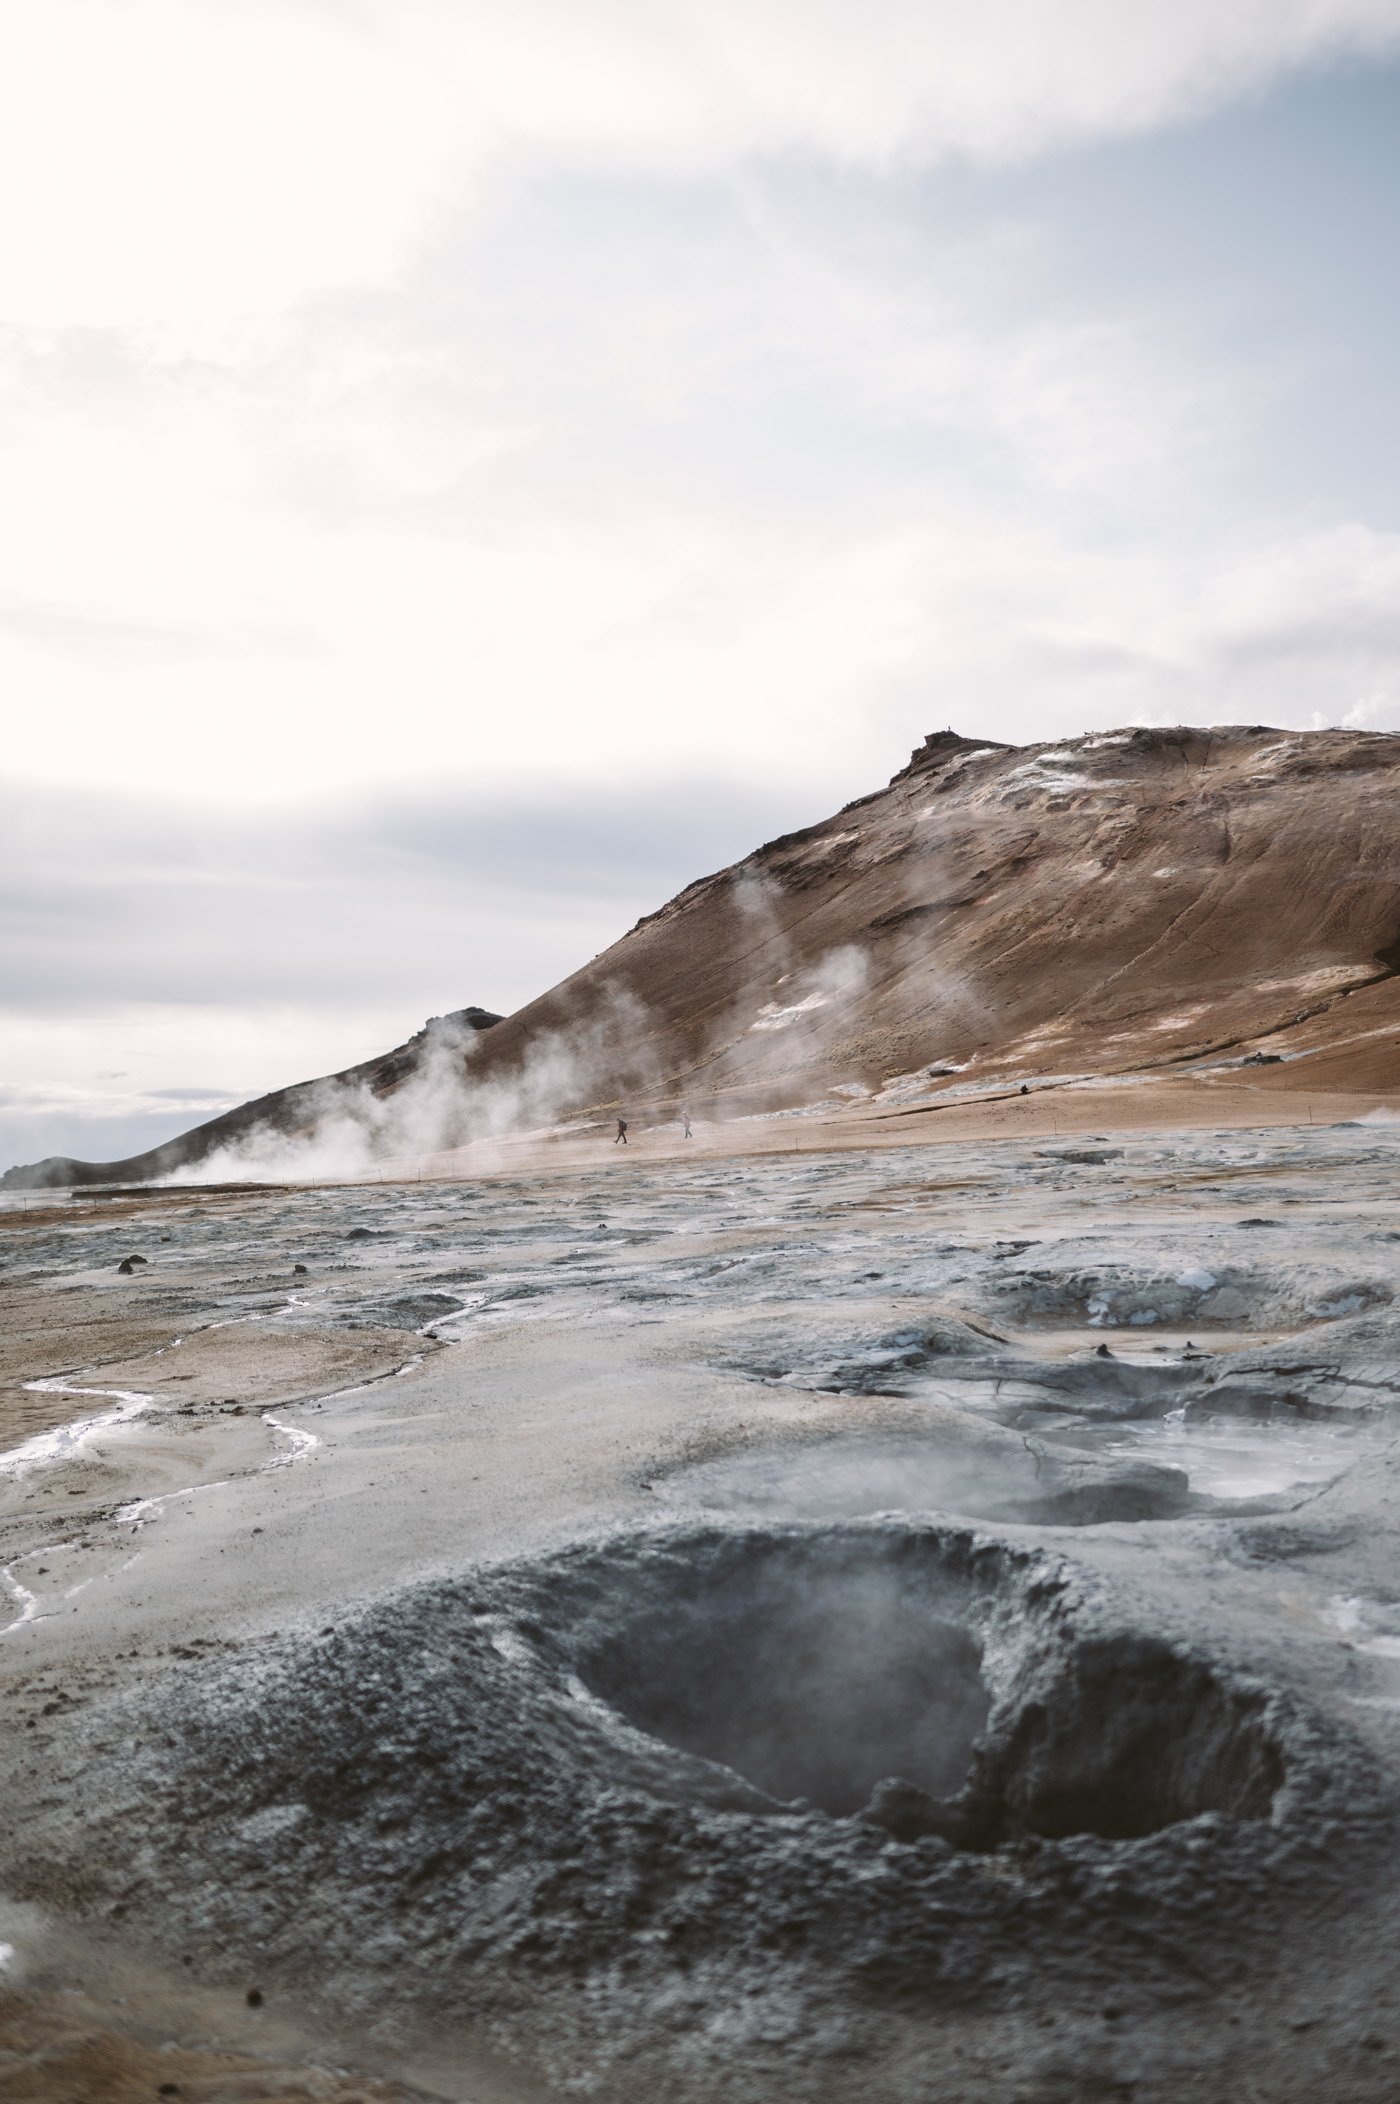 Hverir also called Hverarönd - geothermal field in Iceland's North